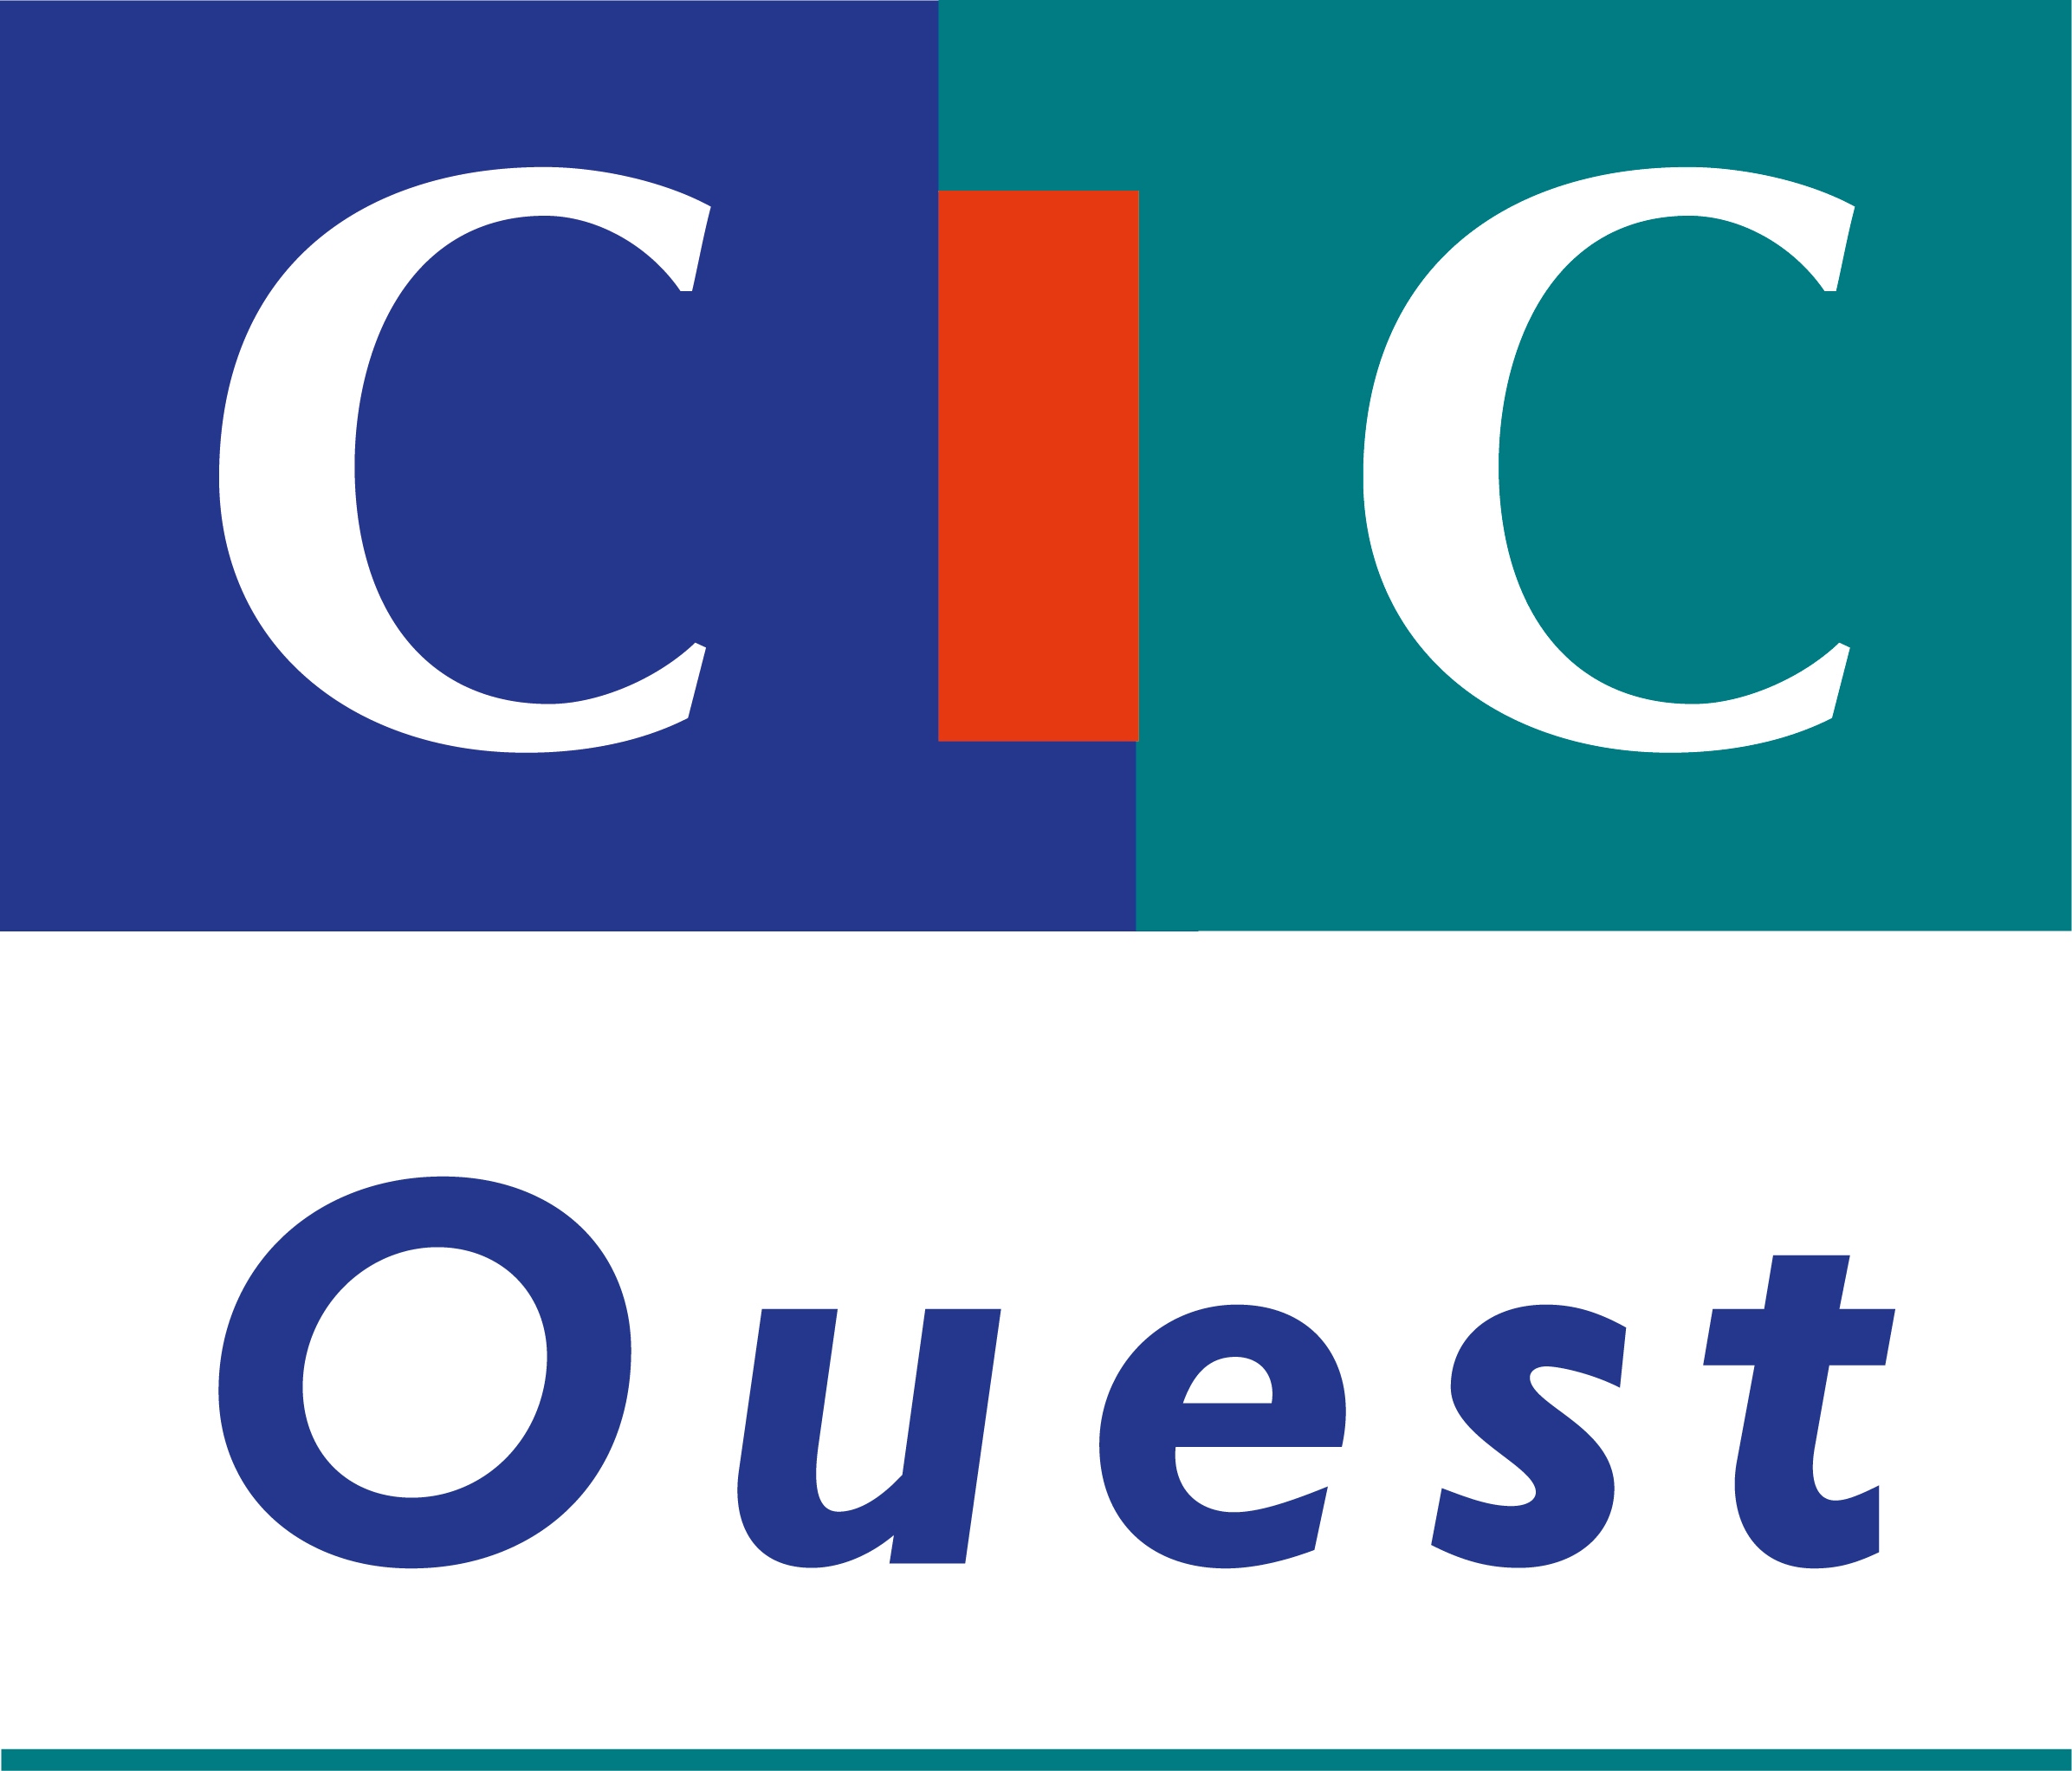 Logo CIC OUEST